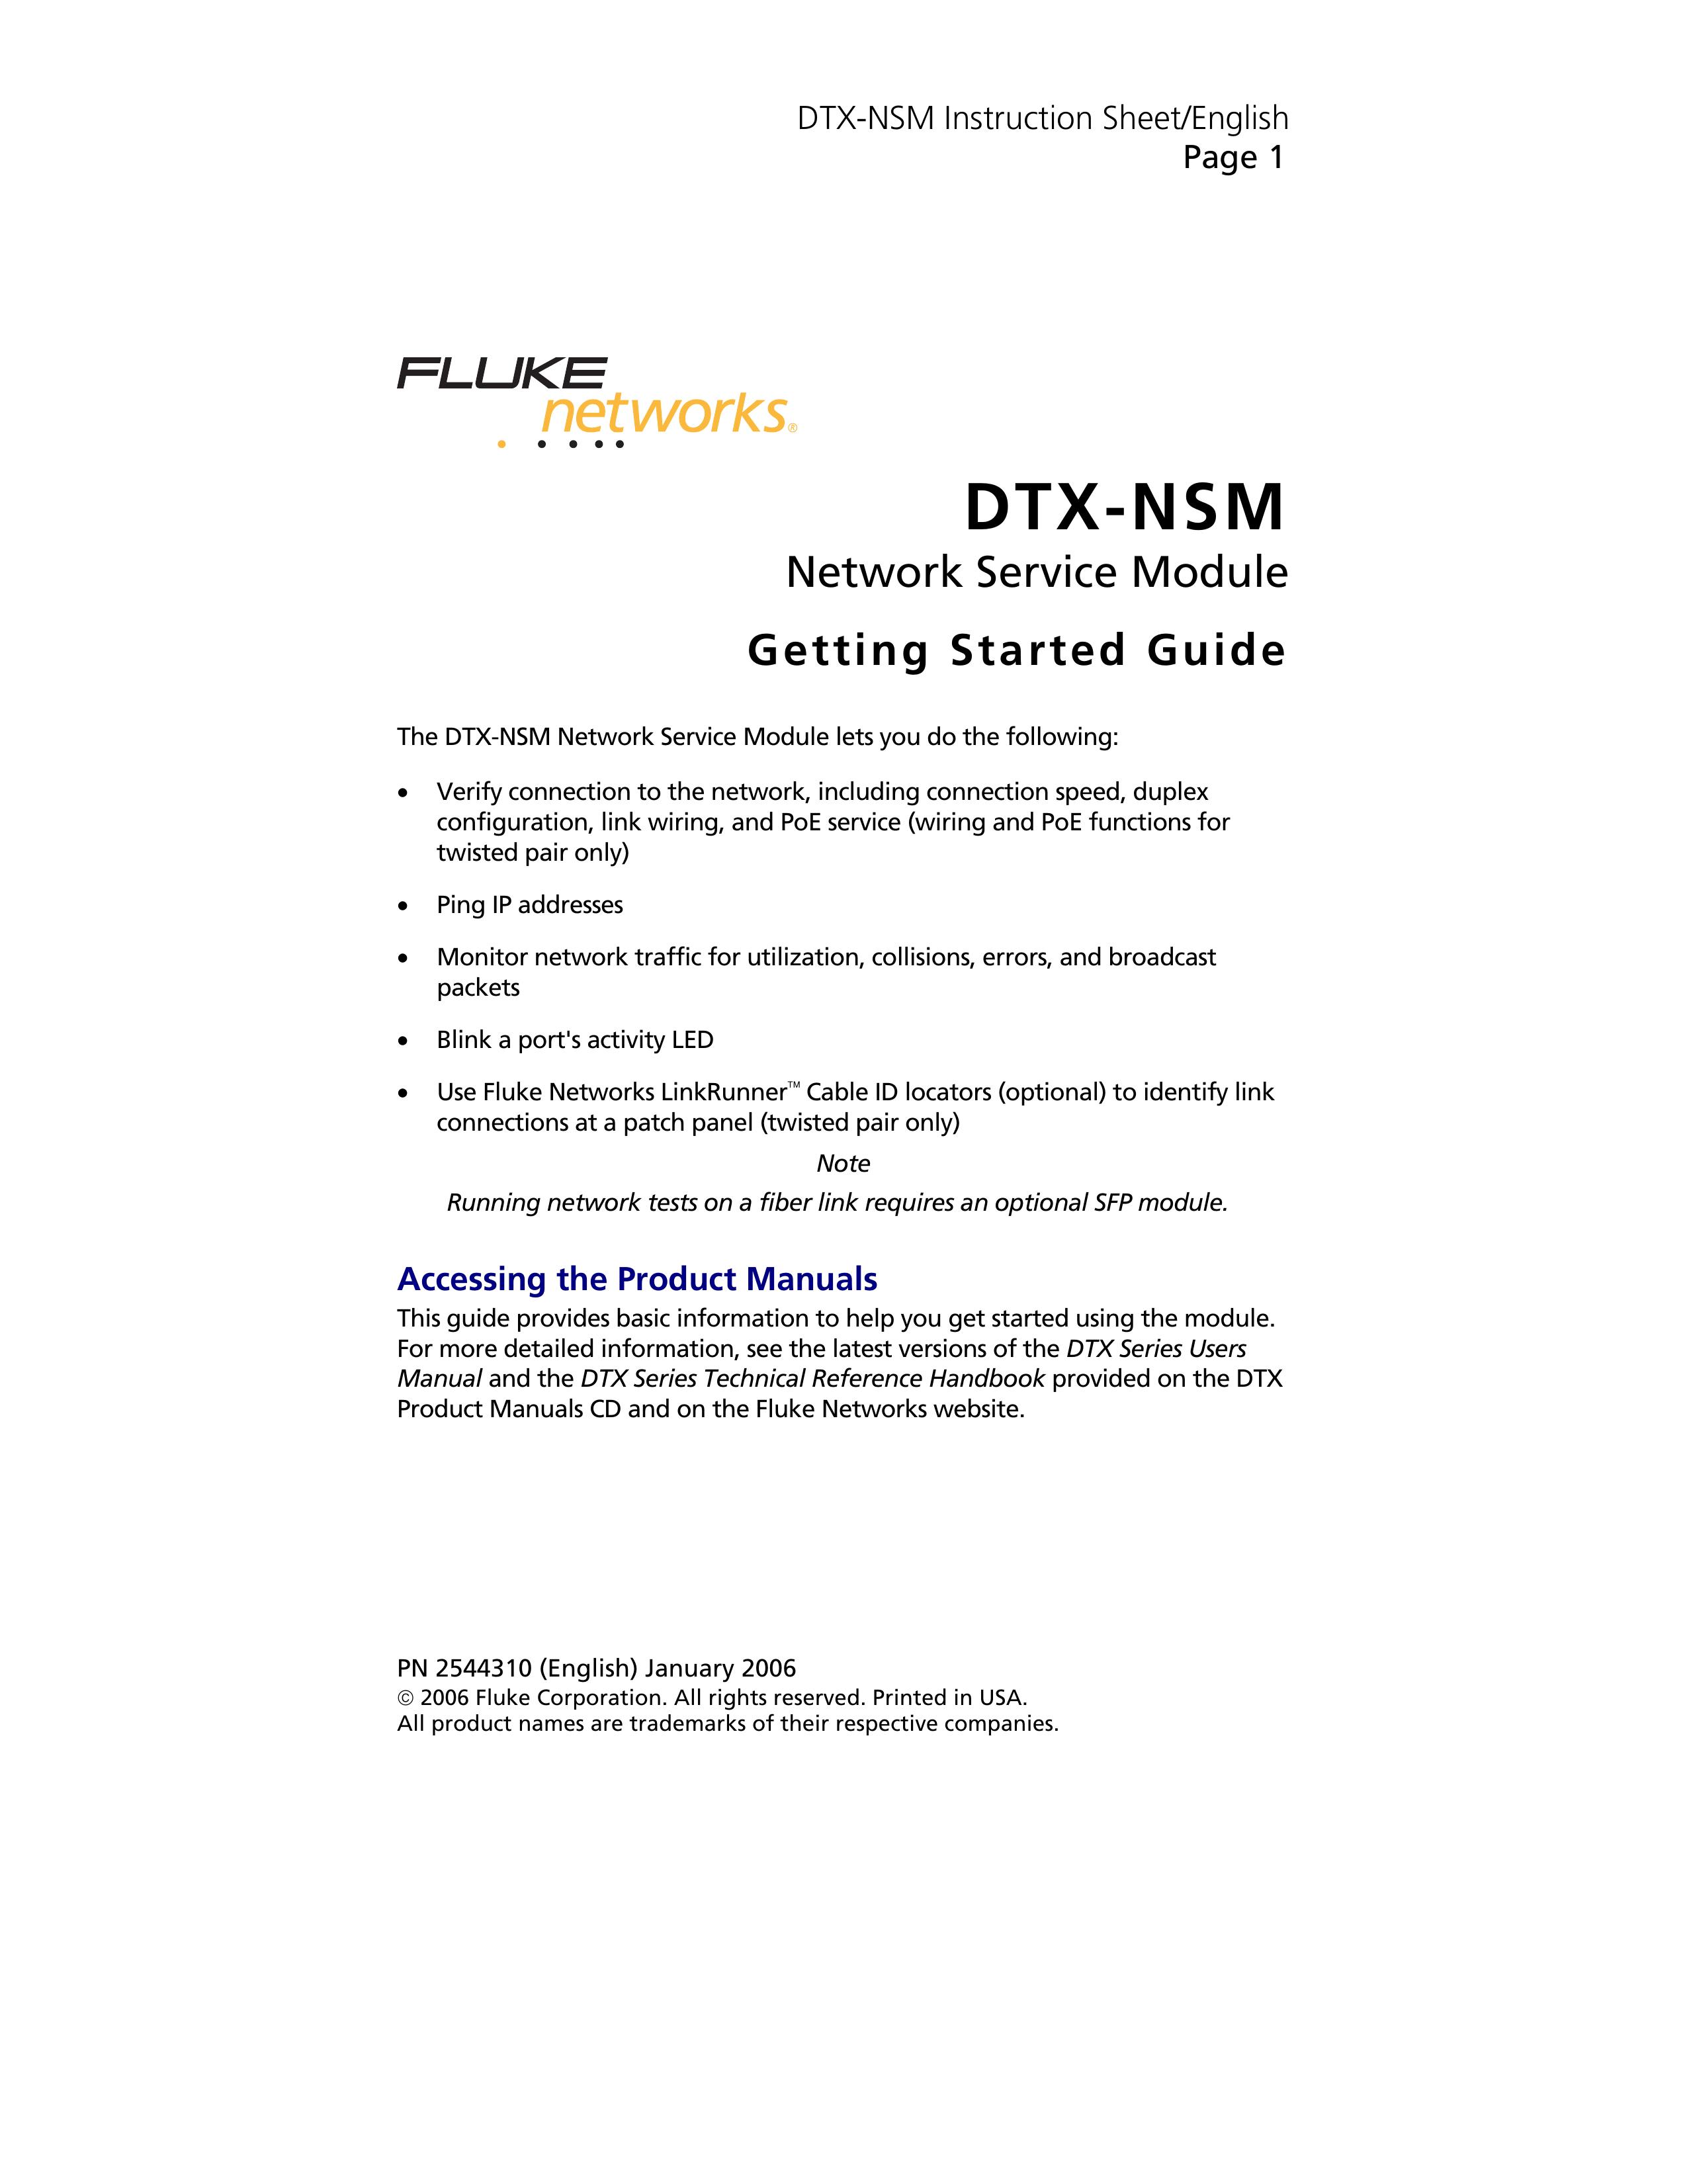 Fluke DTX-NSM Pill Reminder Device User Manual